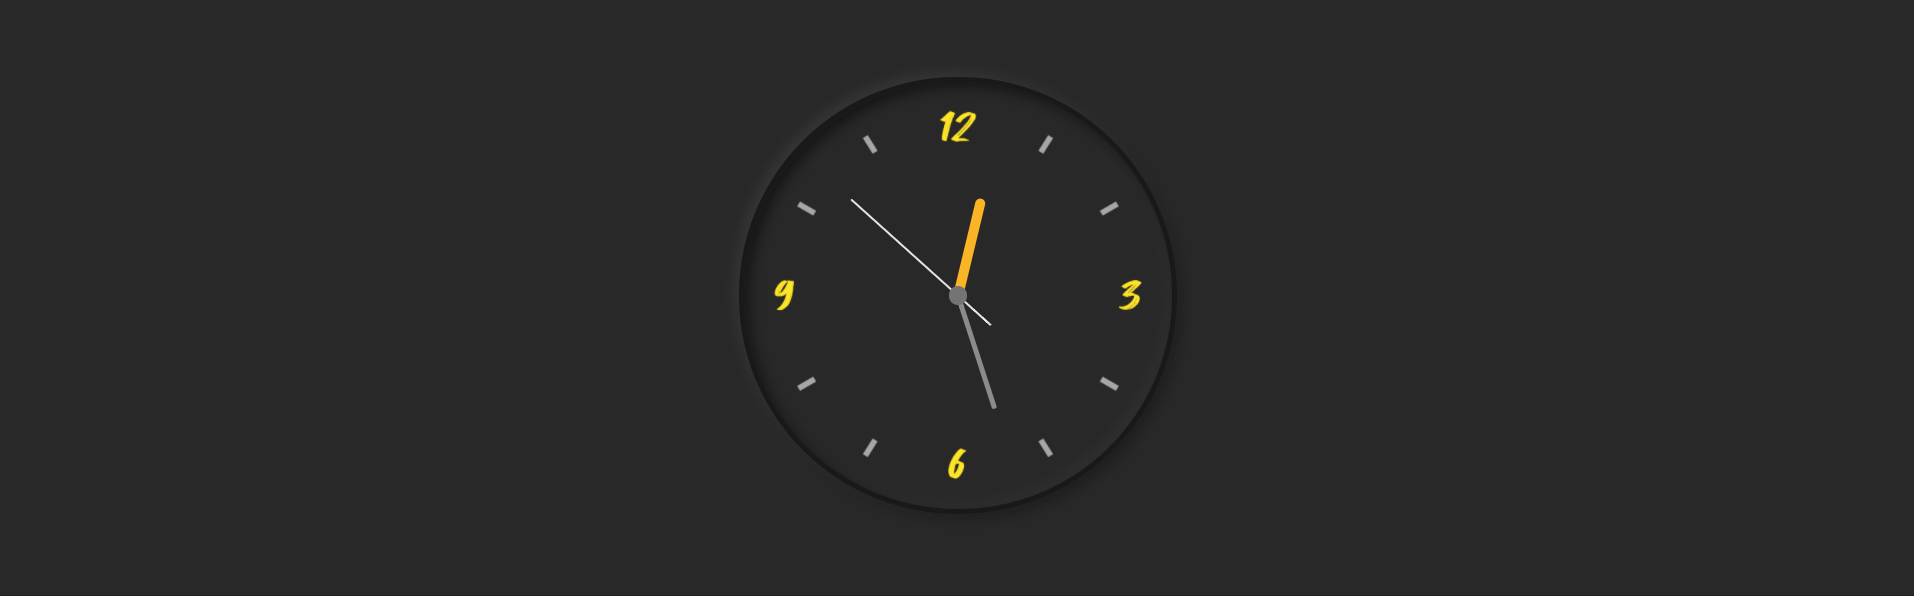 JavaScript CSS Neumorphic Clock